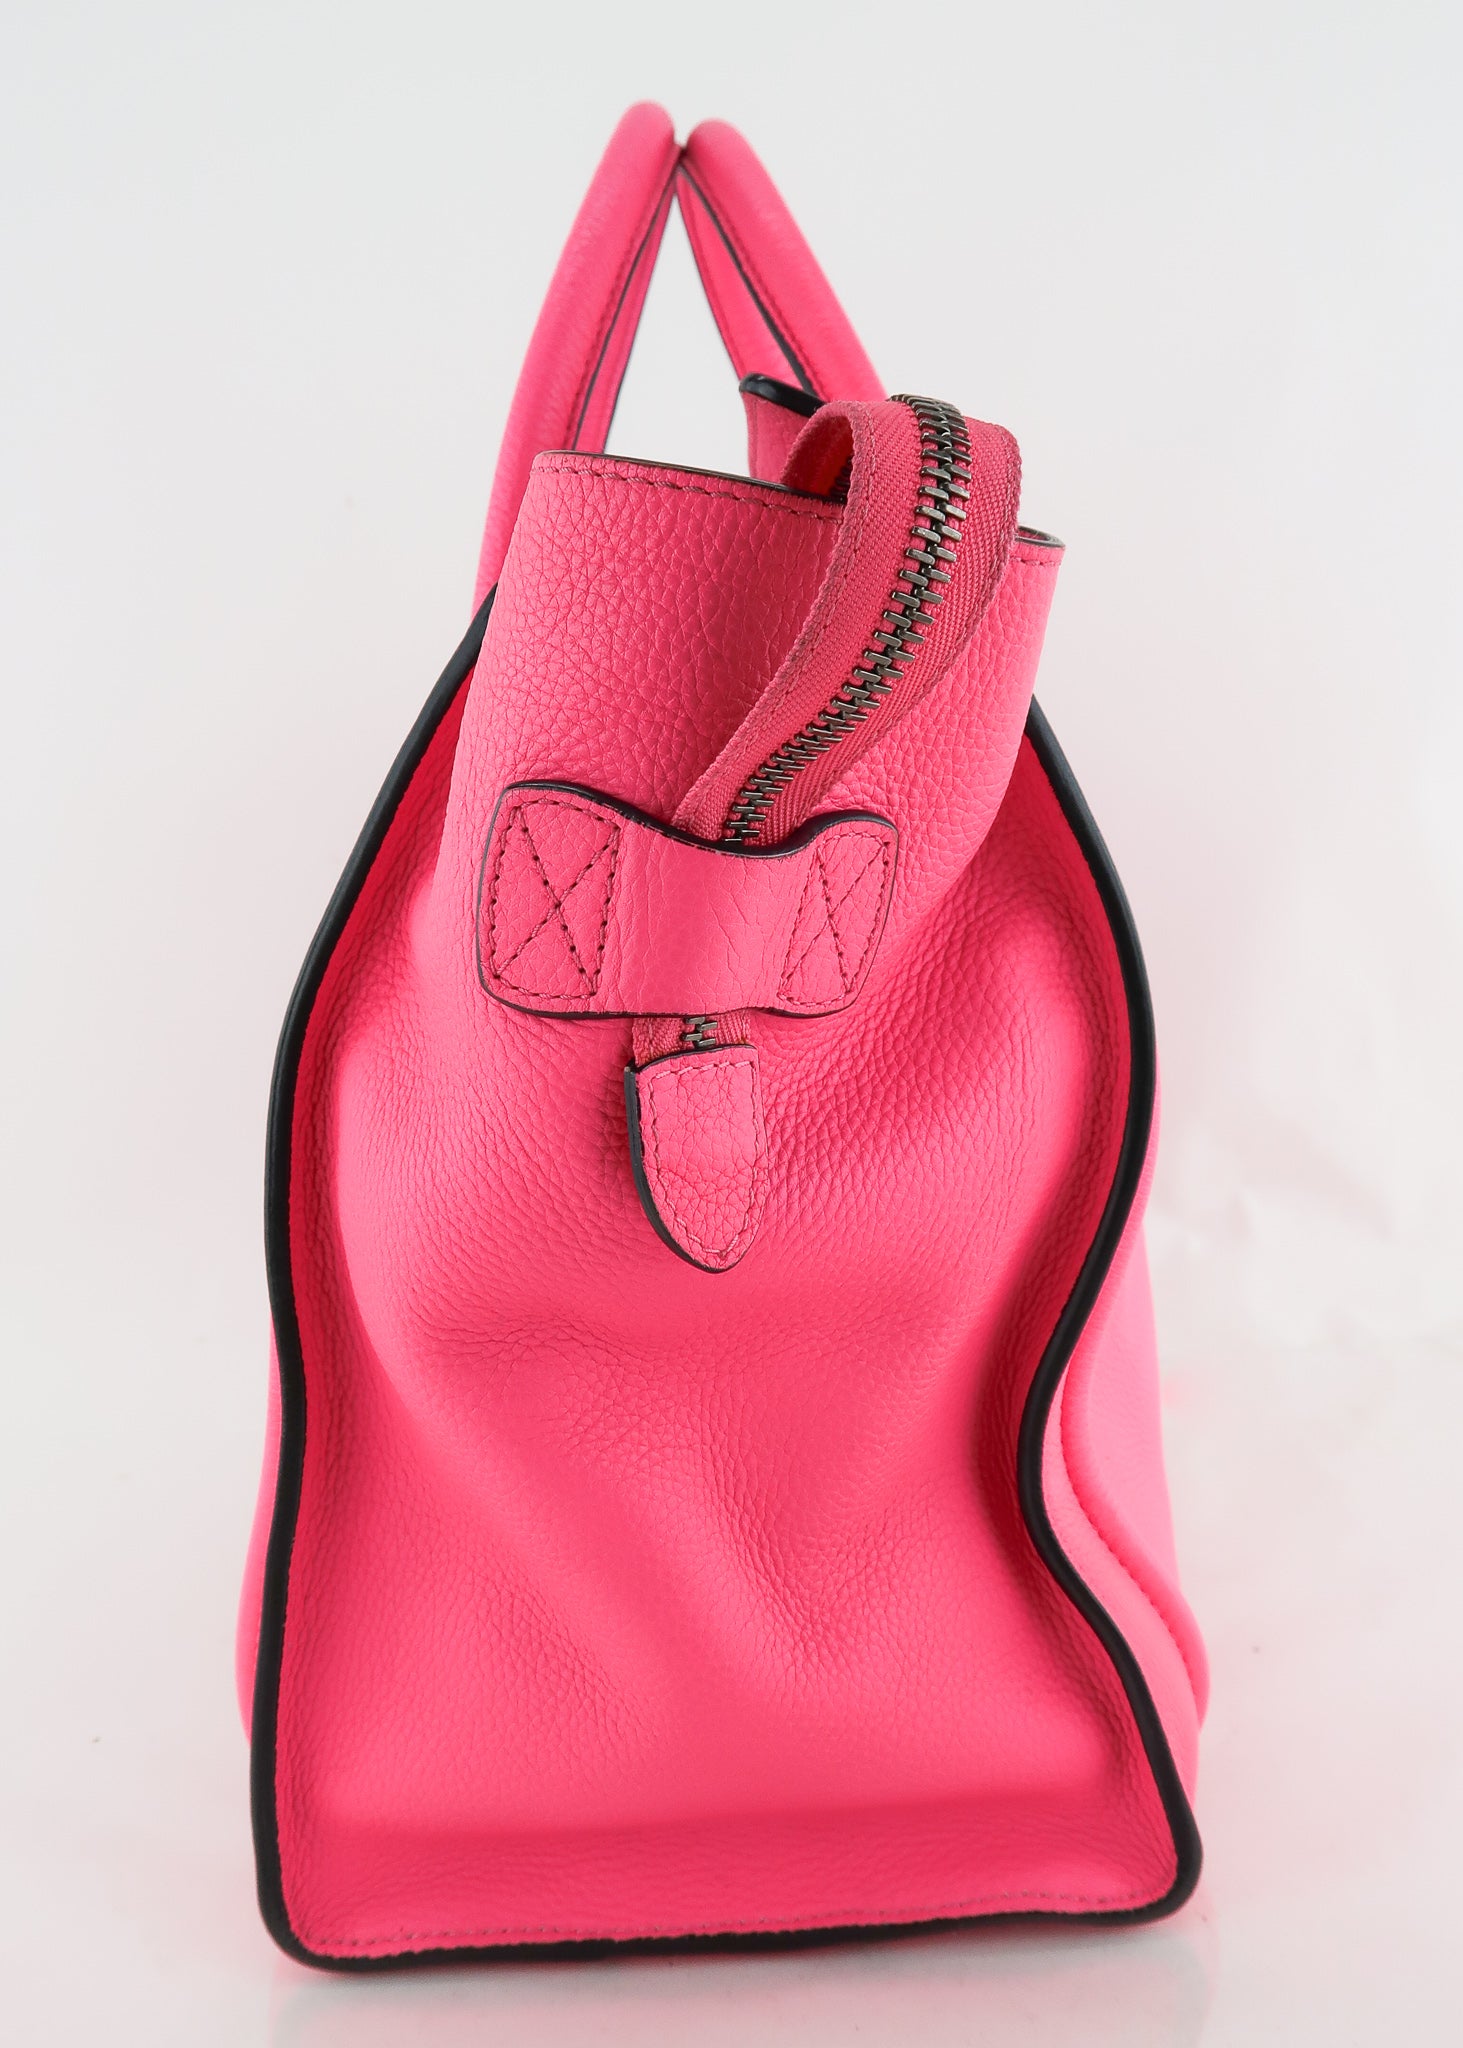 Beautygirl24 #celine #mini #luggage #pink #celineminiluggagepink